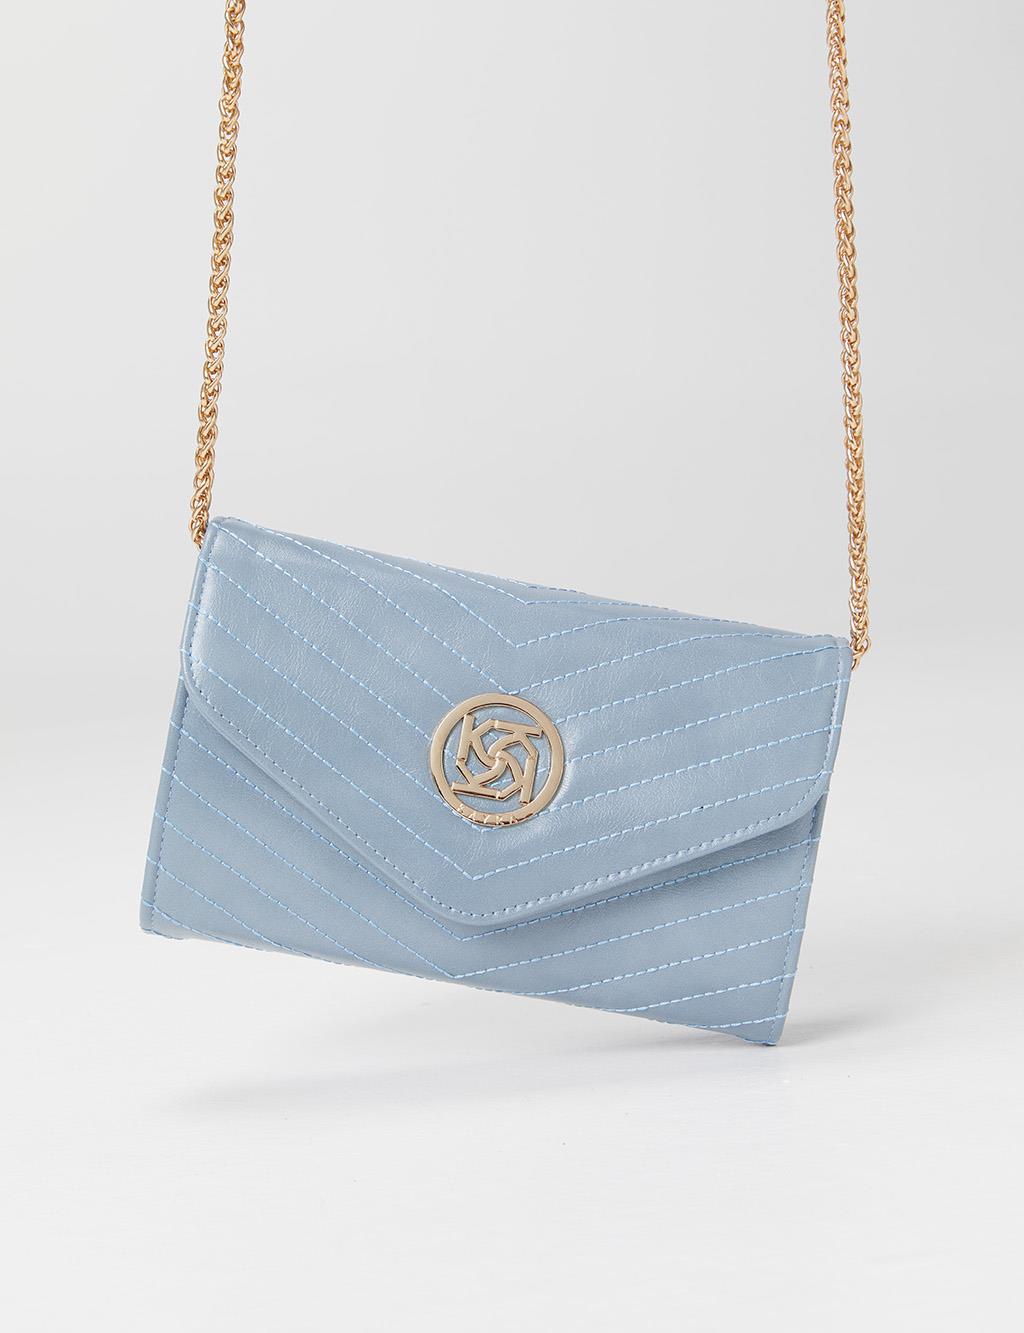 Gold Emblem Quilted Bag Baby Blue